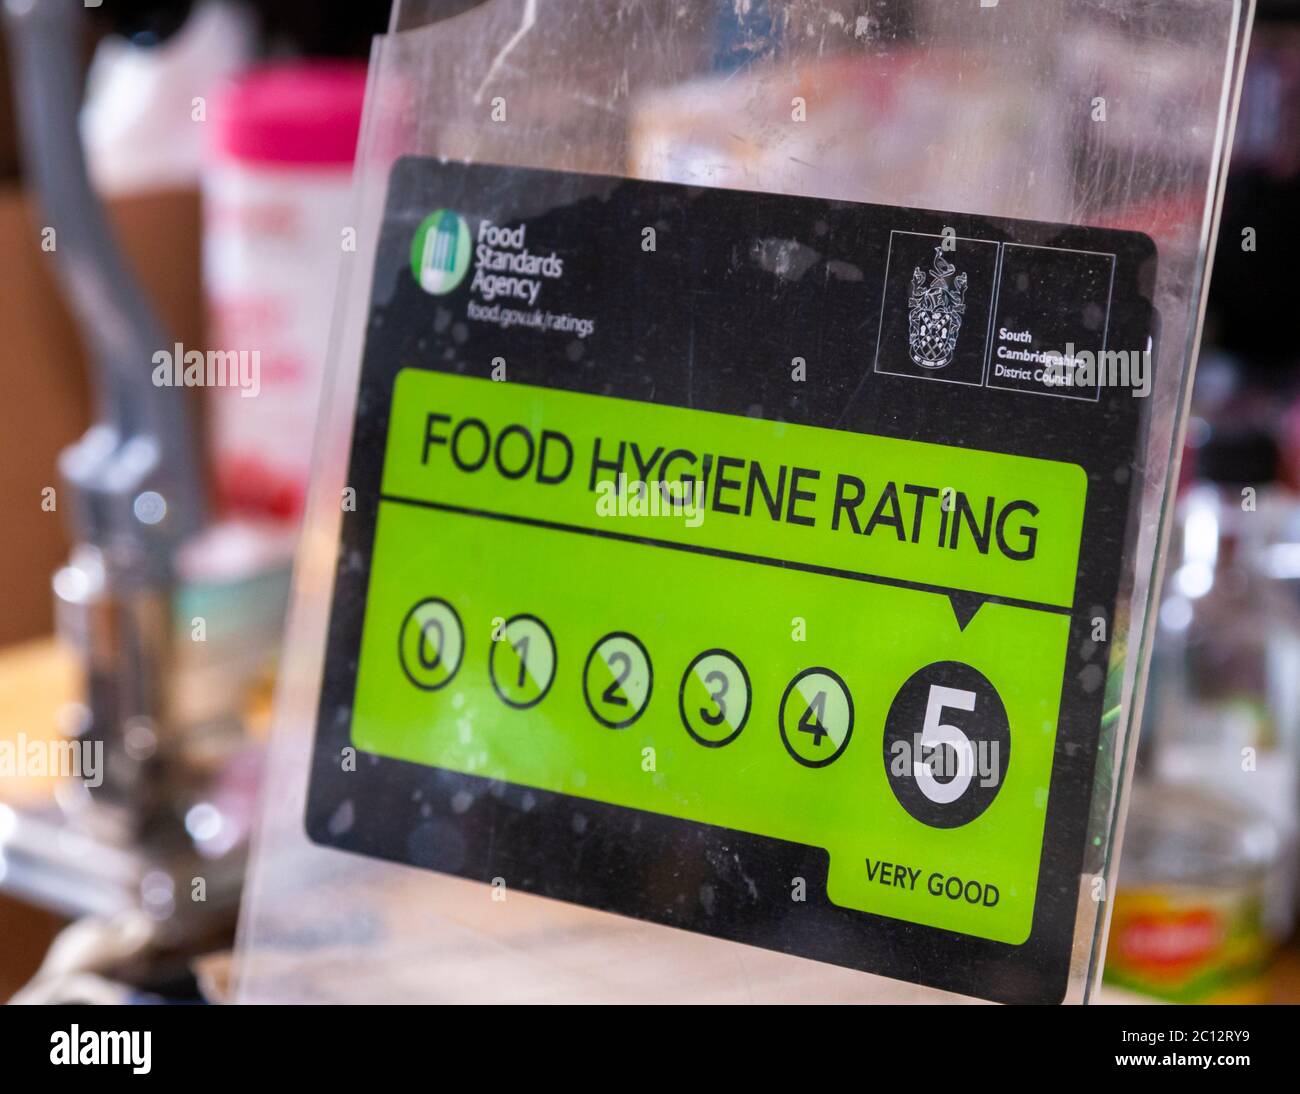 Food Standards Agency: Food Hygiene Rating 5 Stock Photo